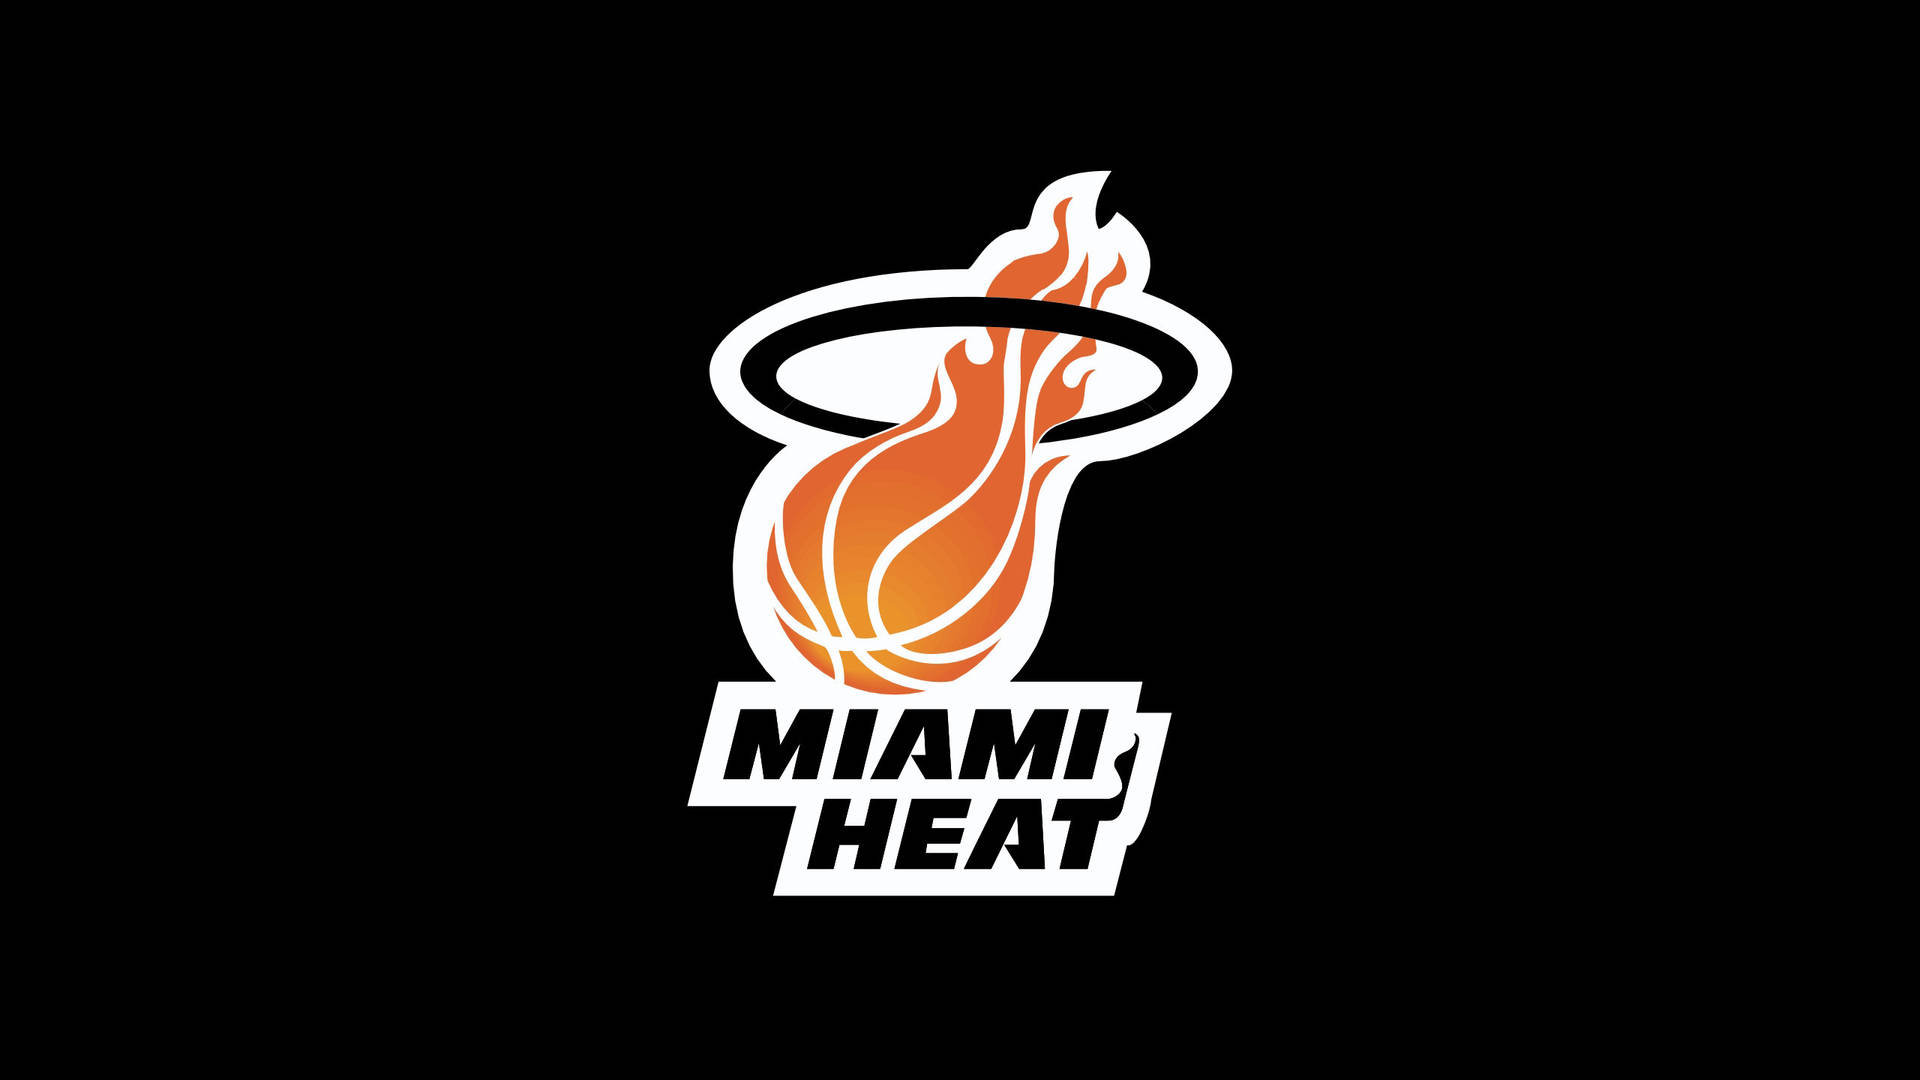 Top 999+ Miami Heat Wallpaper Full HD, 4K✅Free to Use